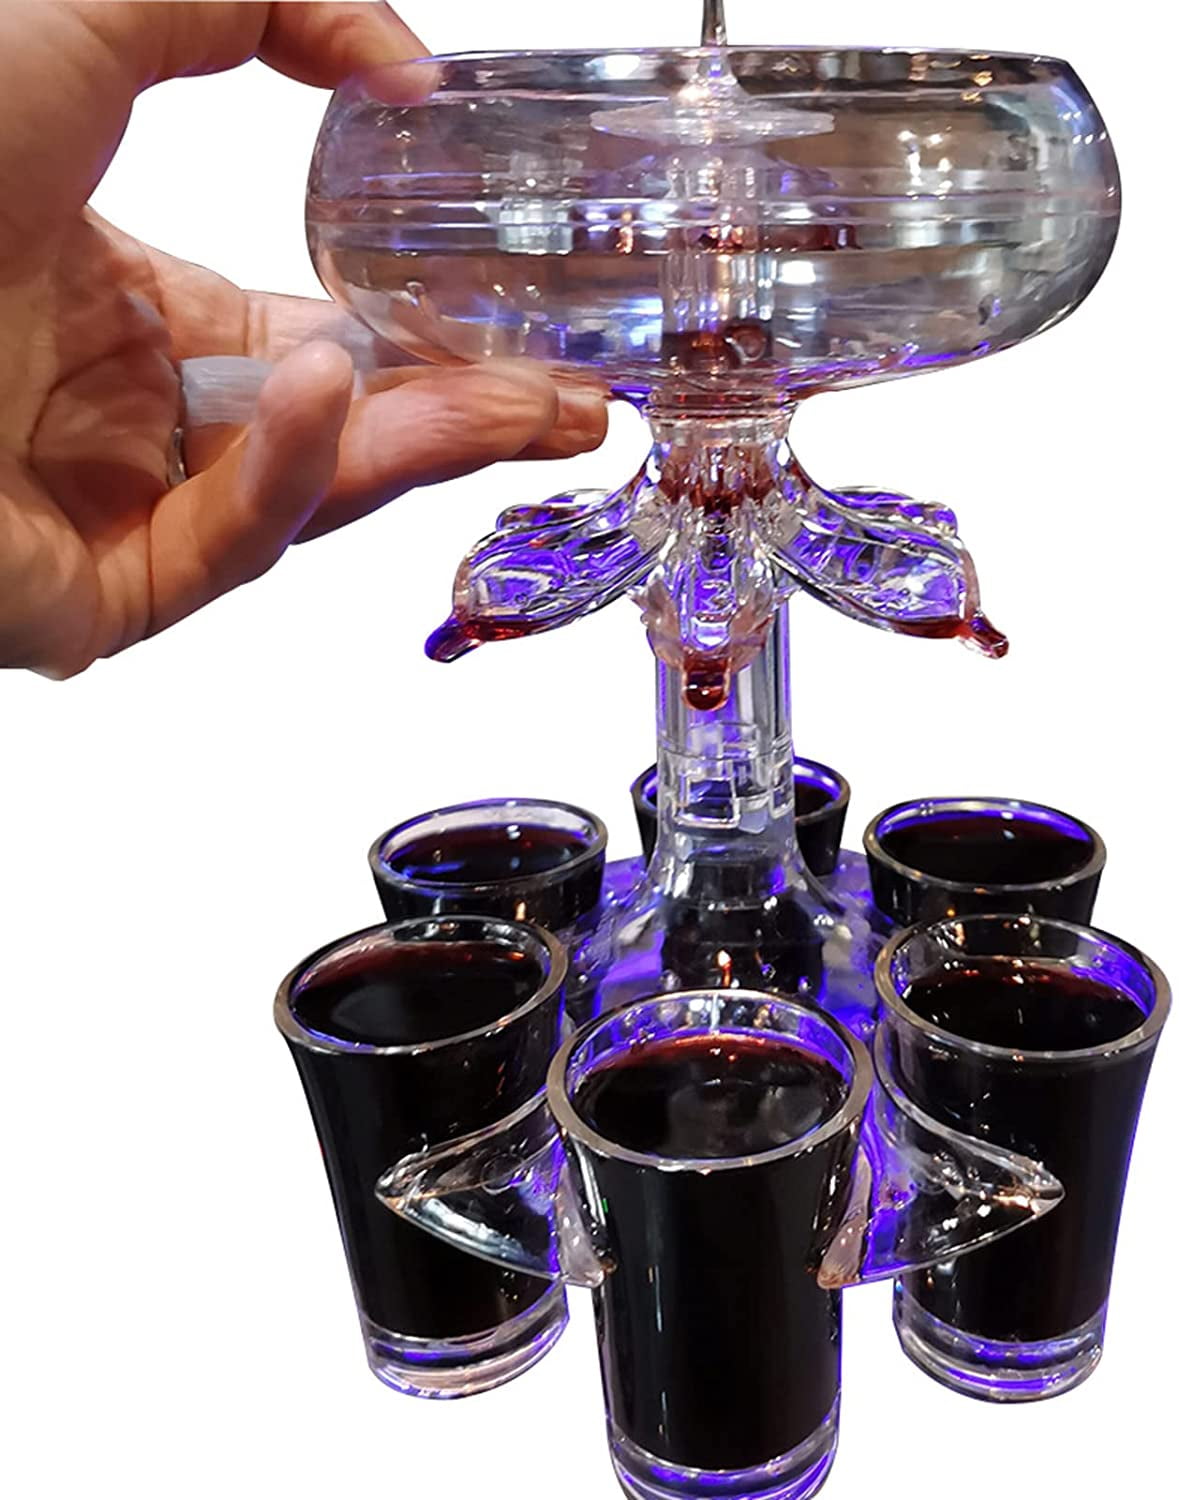 6 Shot Glass Dispenser And Holder Liquor Dispenser Cocktail Home Party Tools US 